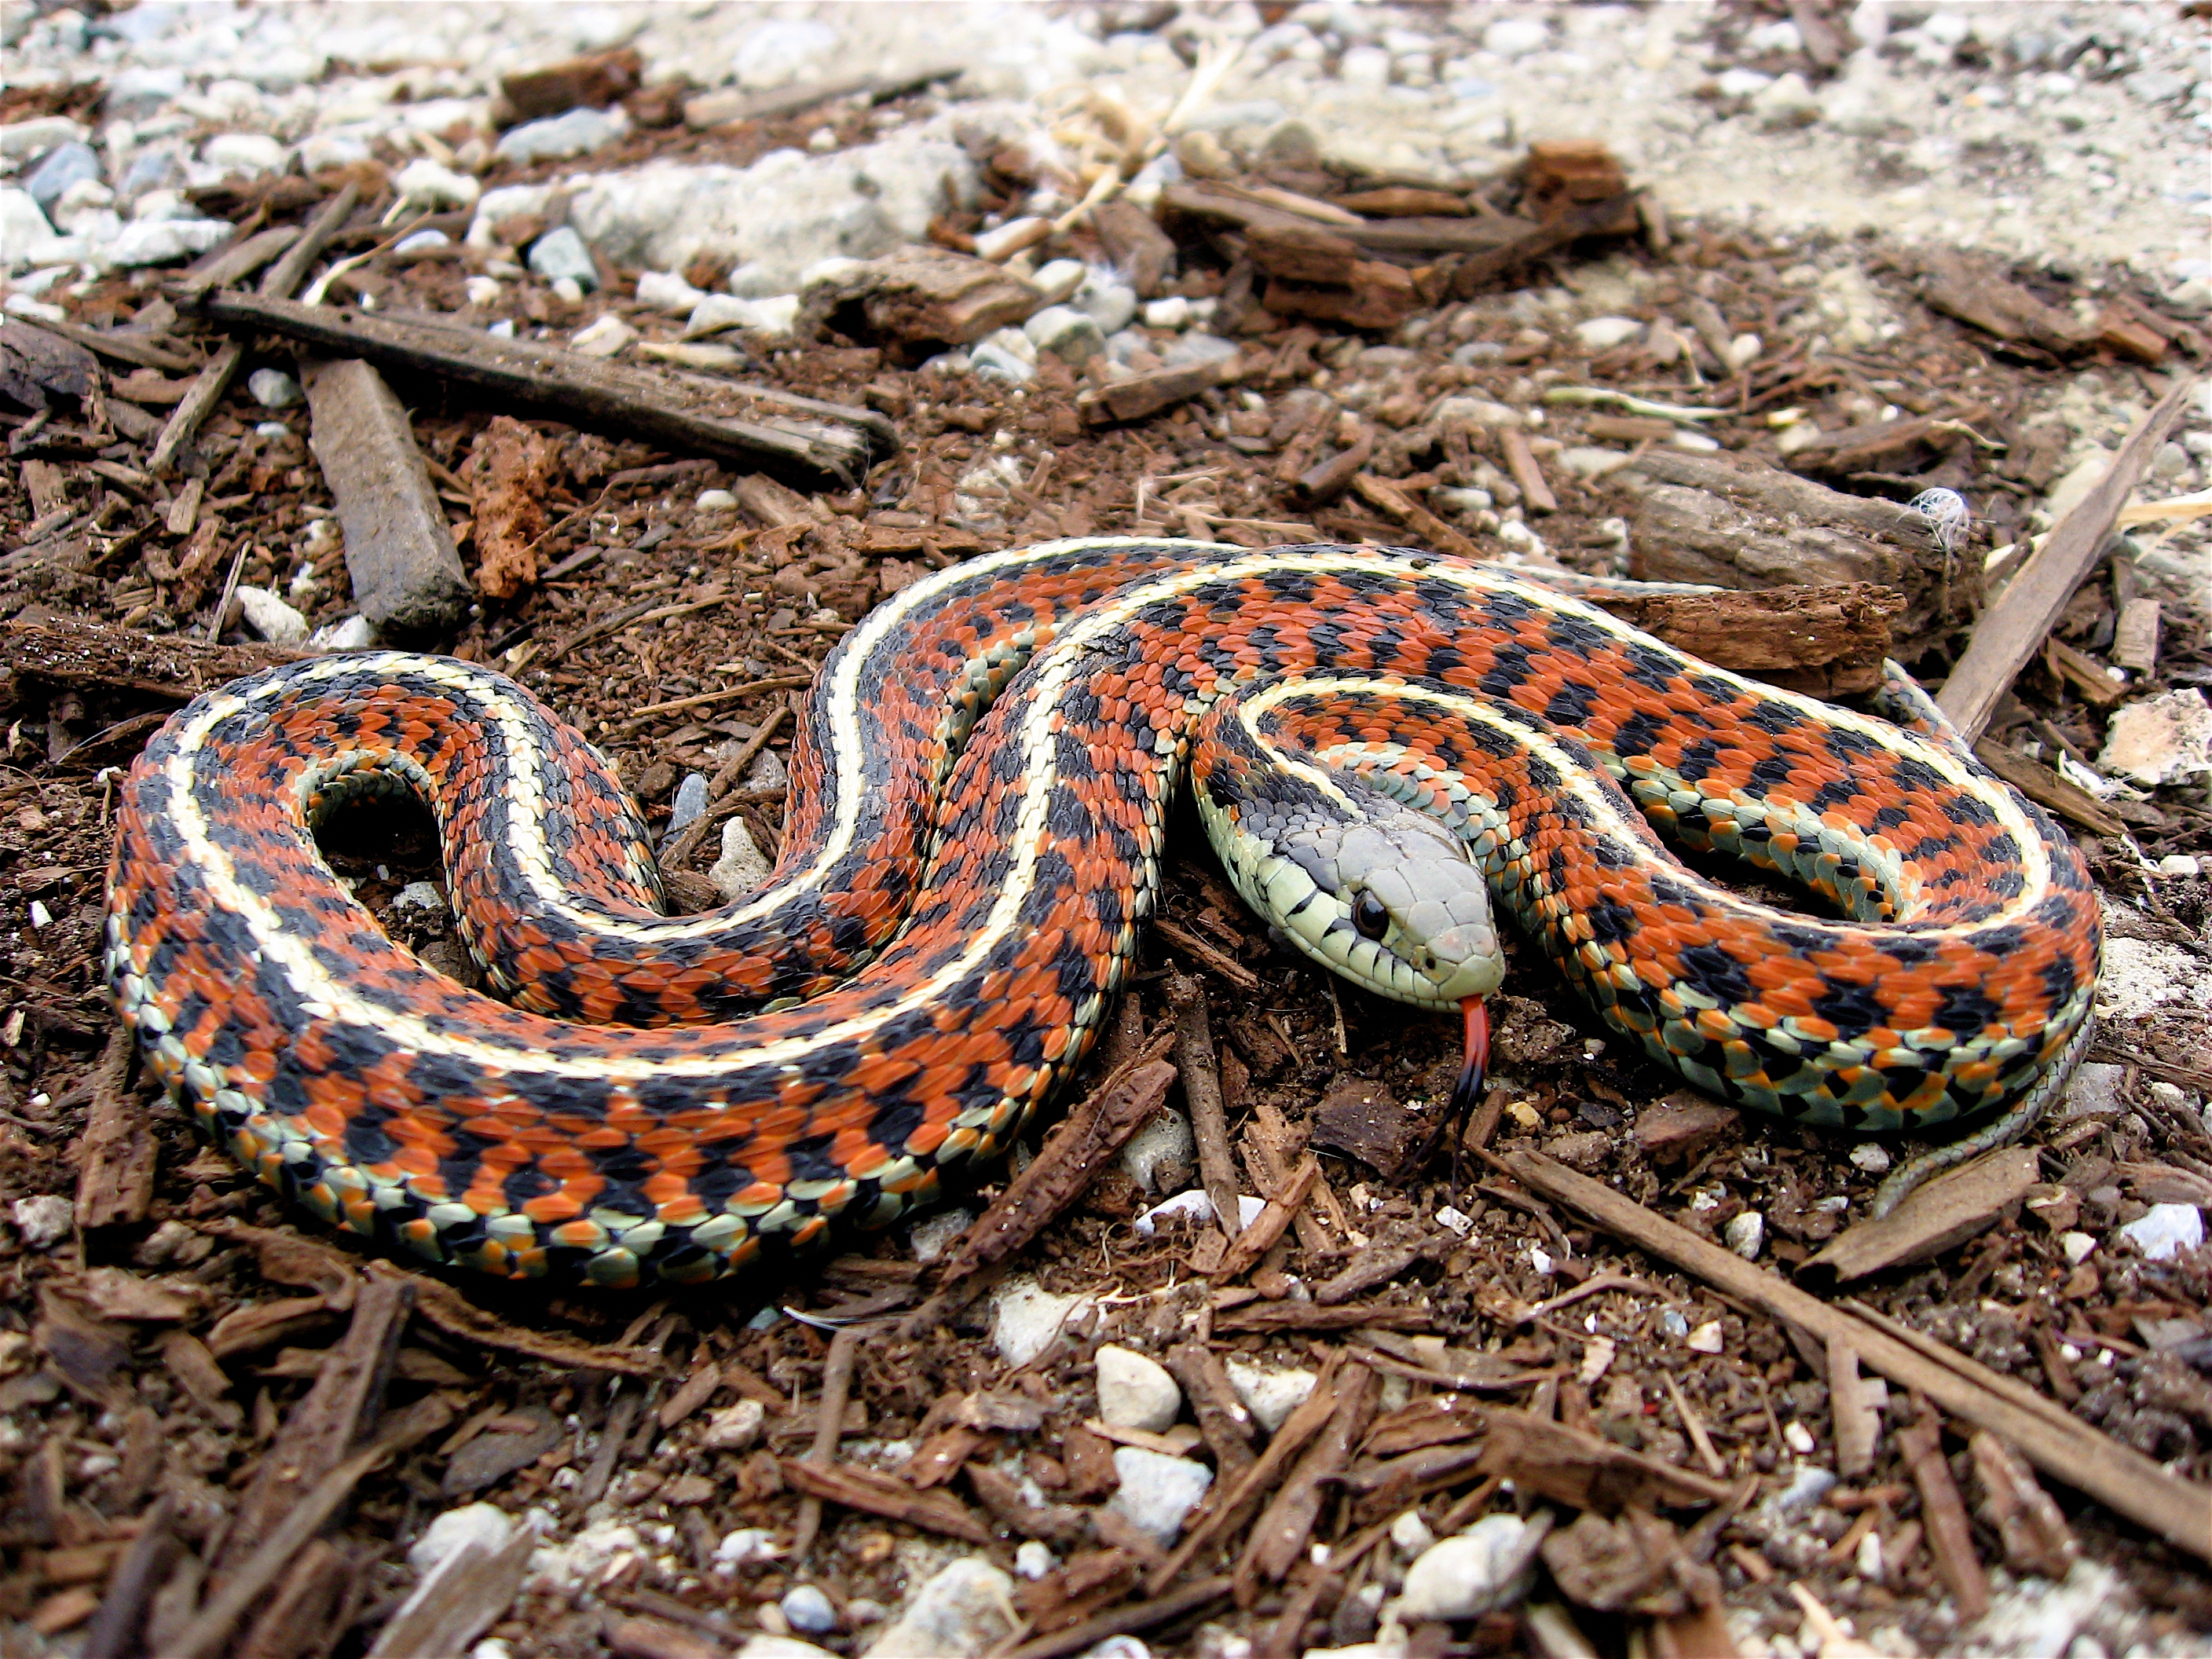 File:Coast Garter Snake.jpg - Wikipedia